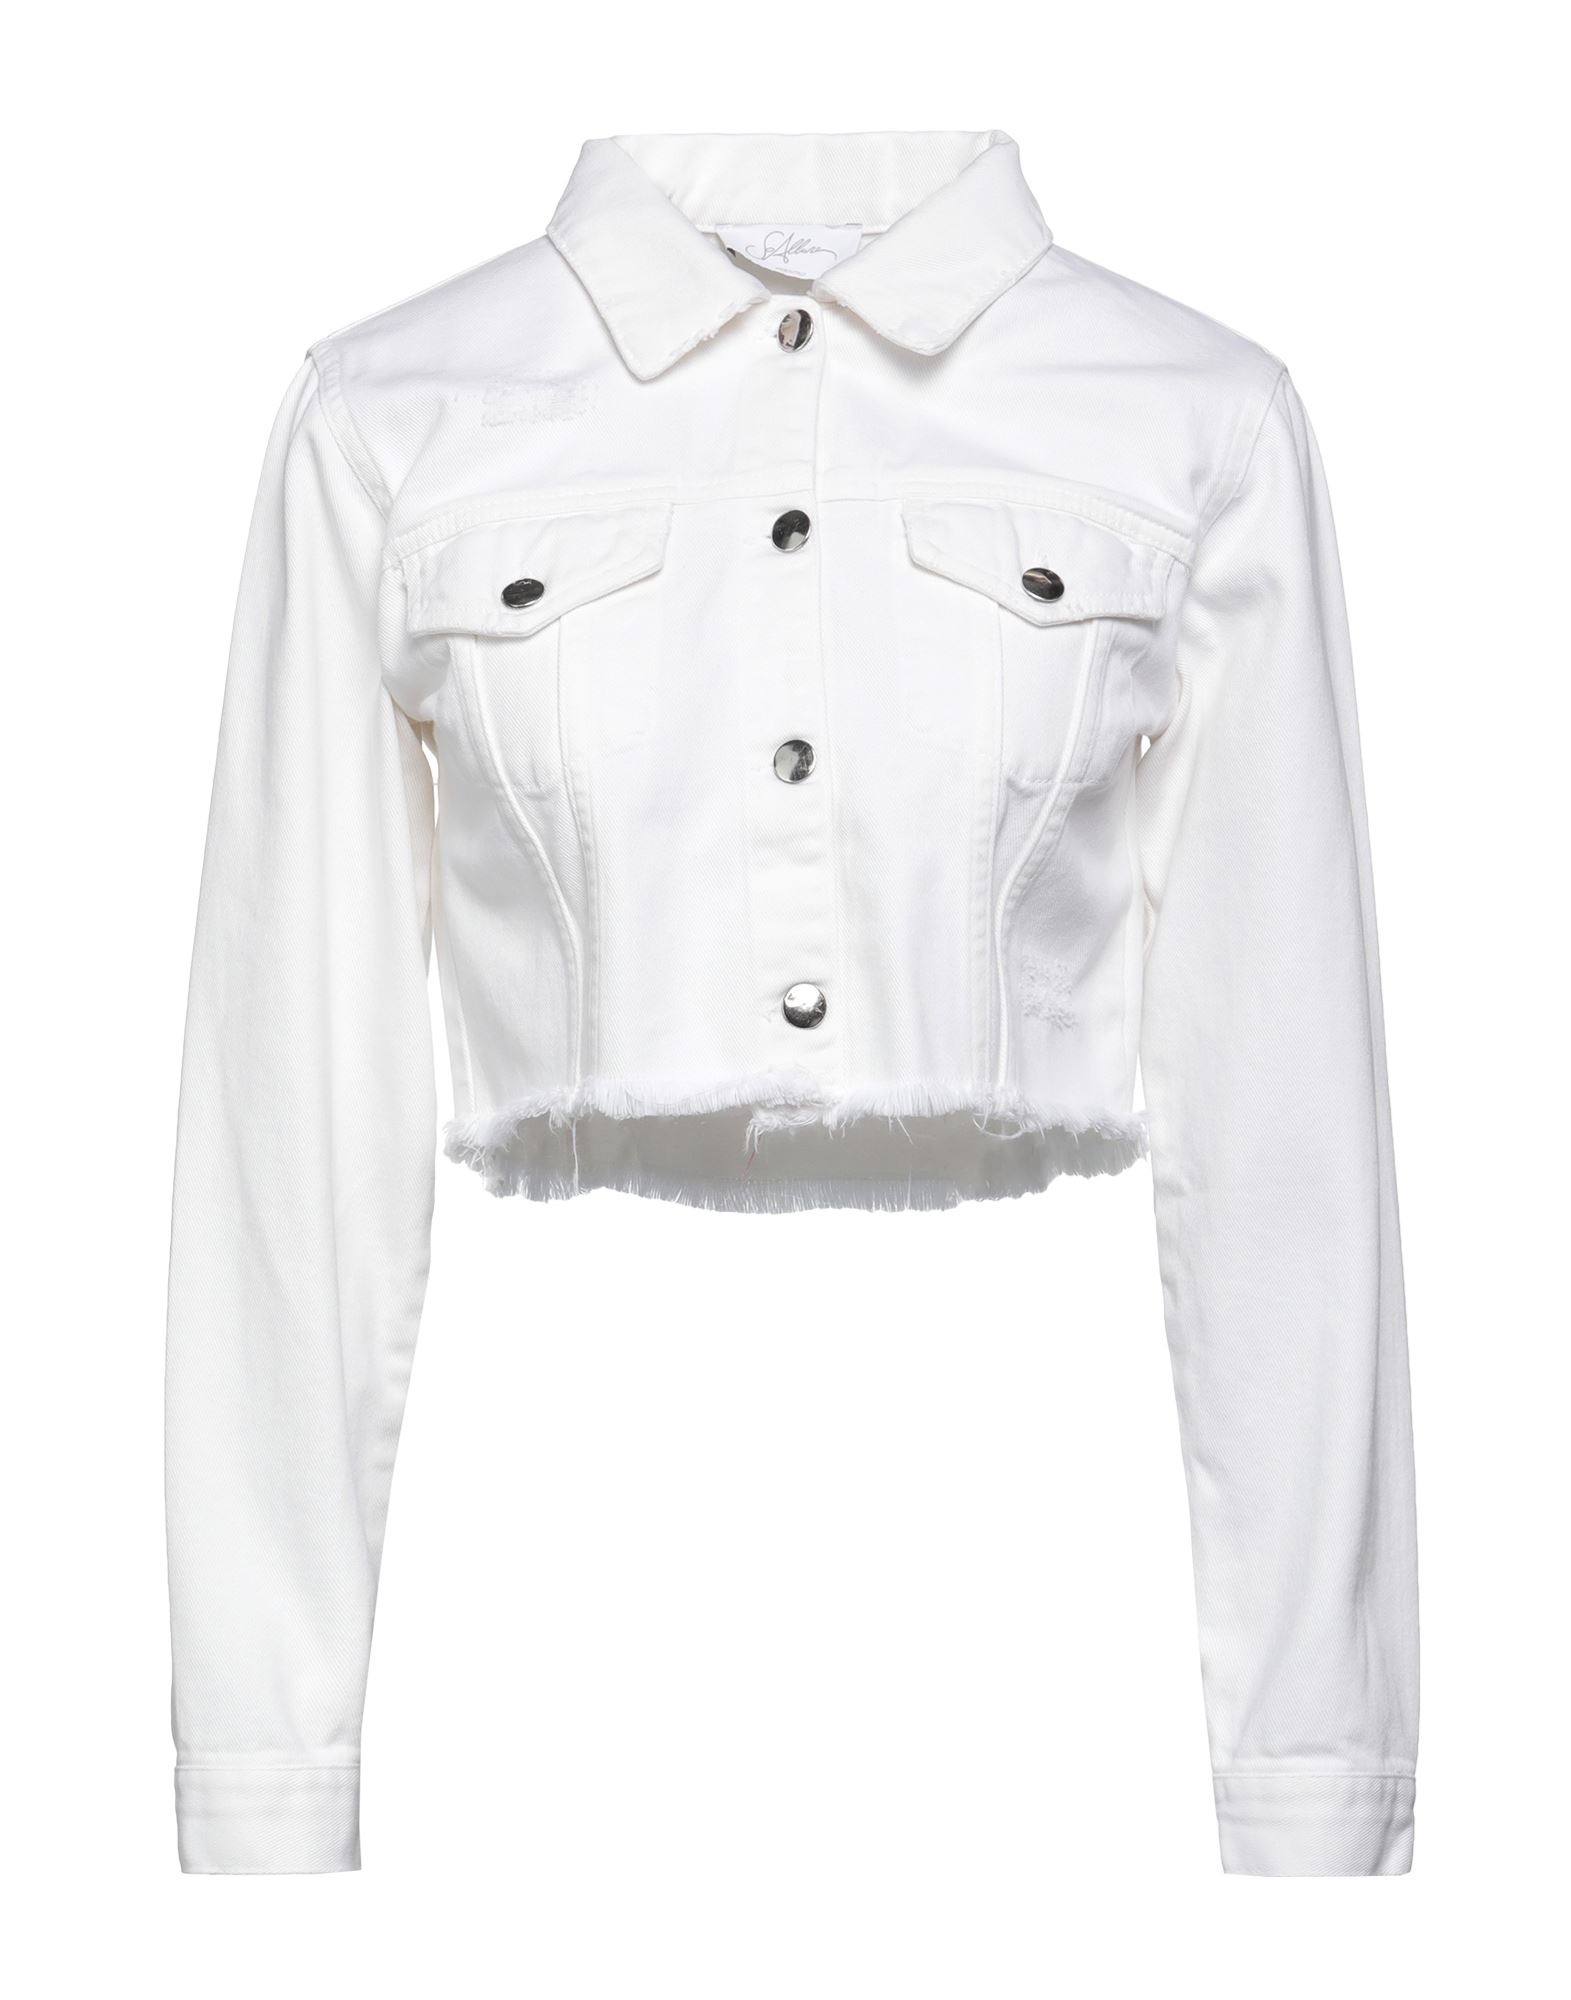 SOALLURE Jeansjacke/-mantel Damen Weiß von SOALLURE